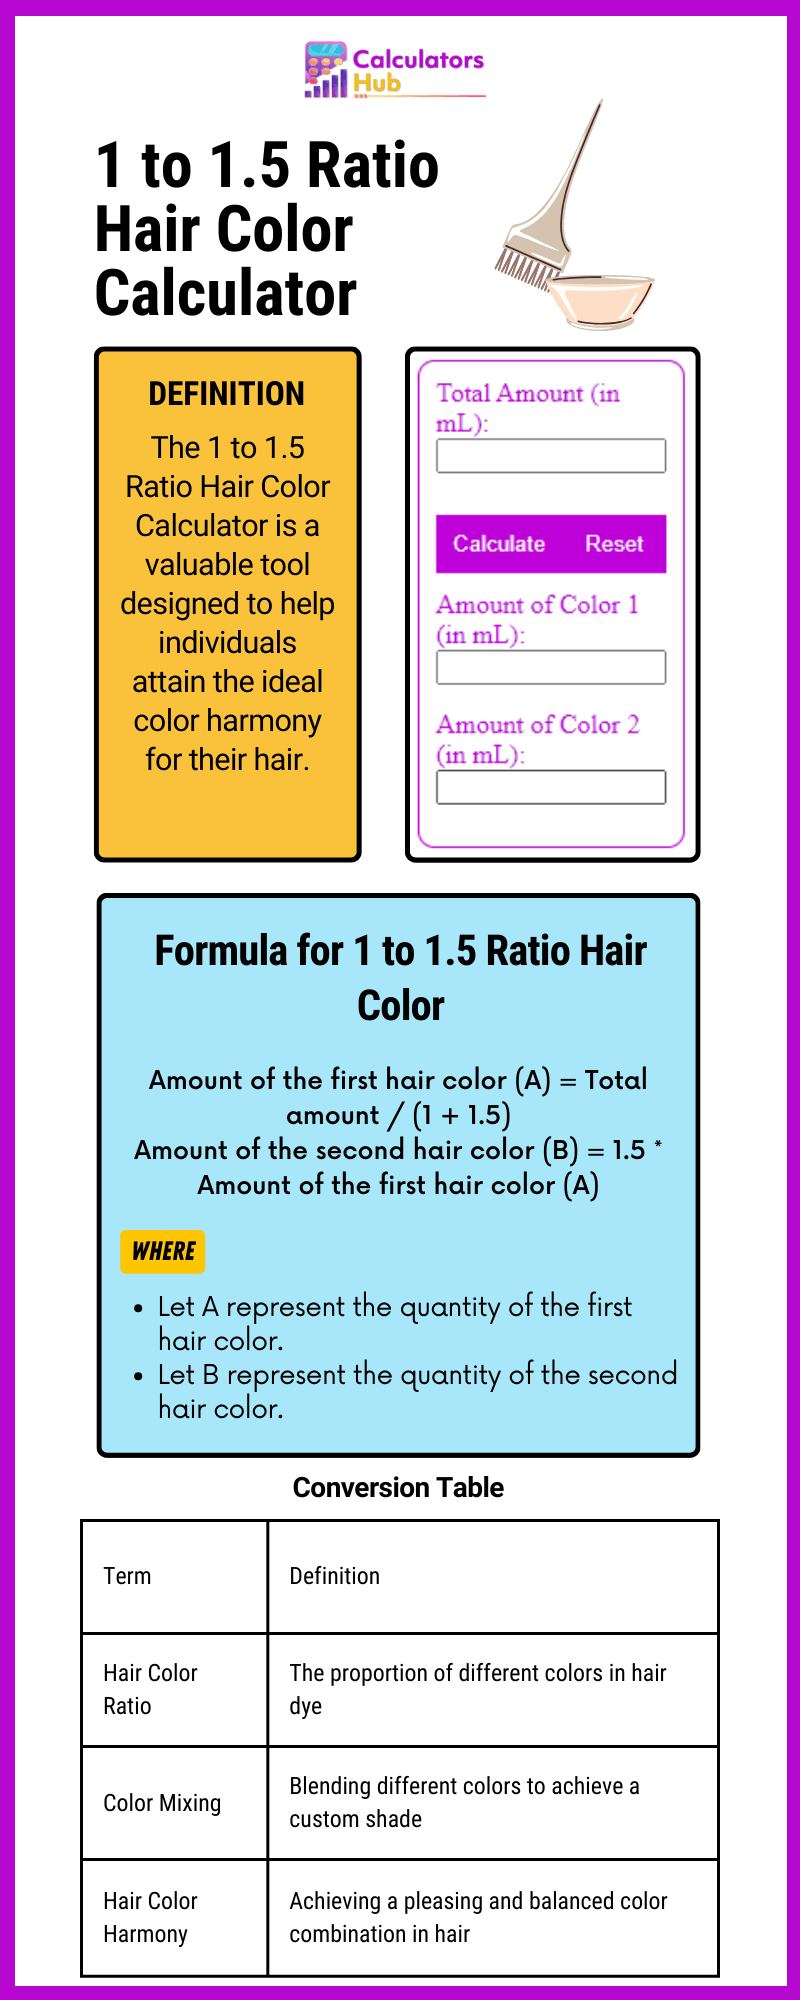 1 to 1.5 Ratio Hair Color Calculator